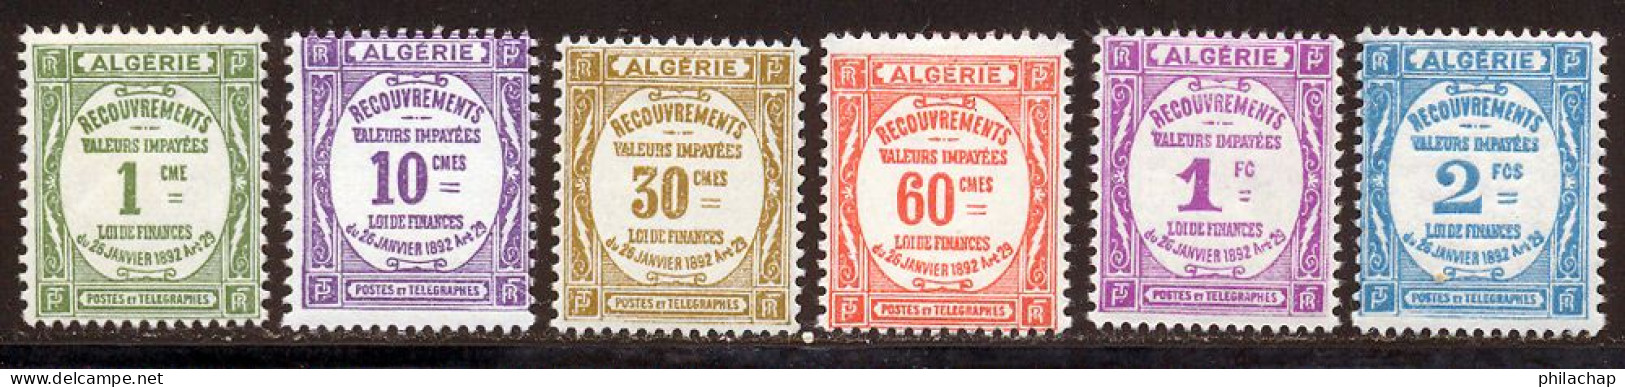 Algerie Taxe 1926 Yvert 15 / 20 * TB Charniere(s) - Segnatasse